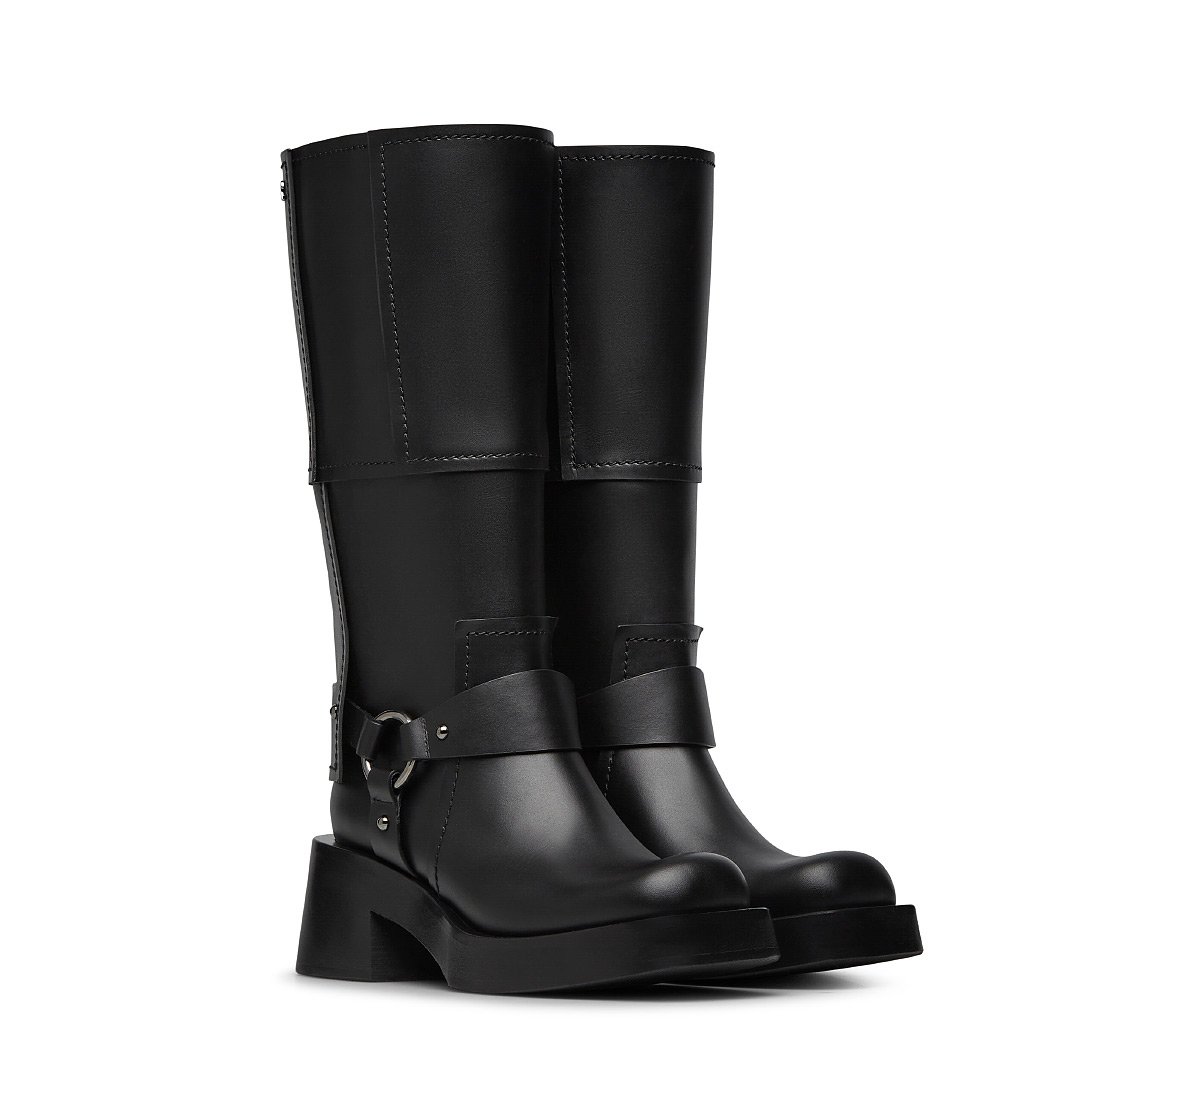 Fabi calf leather boot